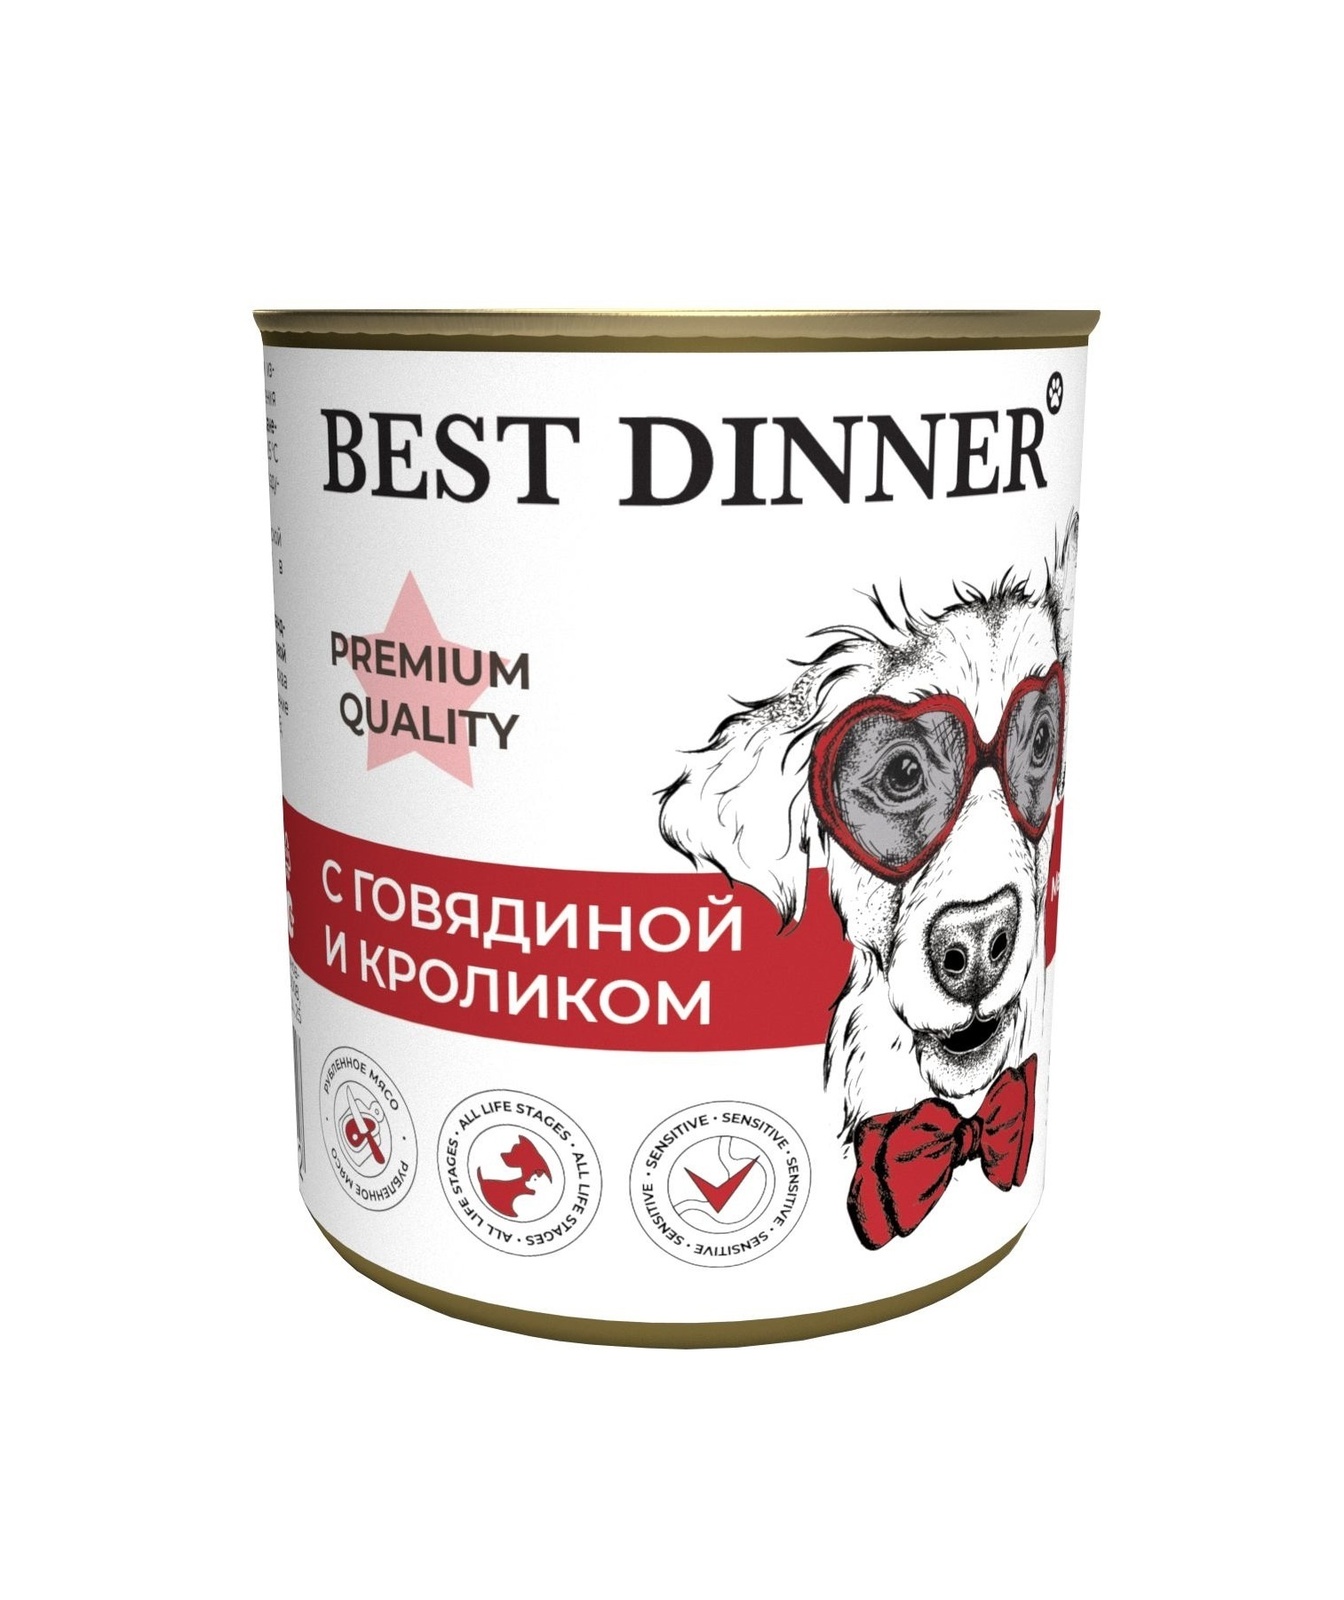 Best Dinner Best Dinner консервы Premium меню №3 С говядиной и кроликом (340 г) best dinner best dinner консервы для щенков premium меню 1 с ягненком 340 г